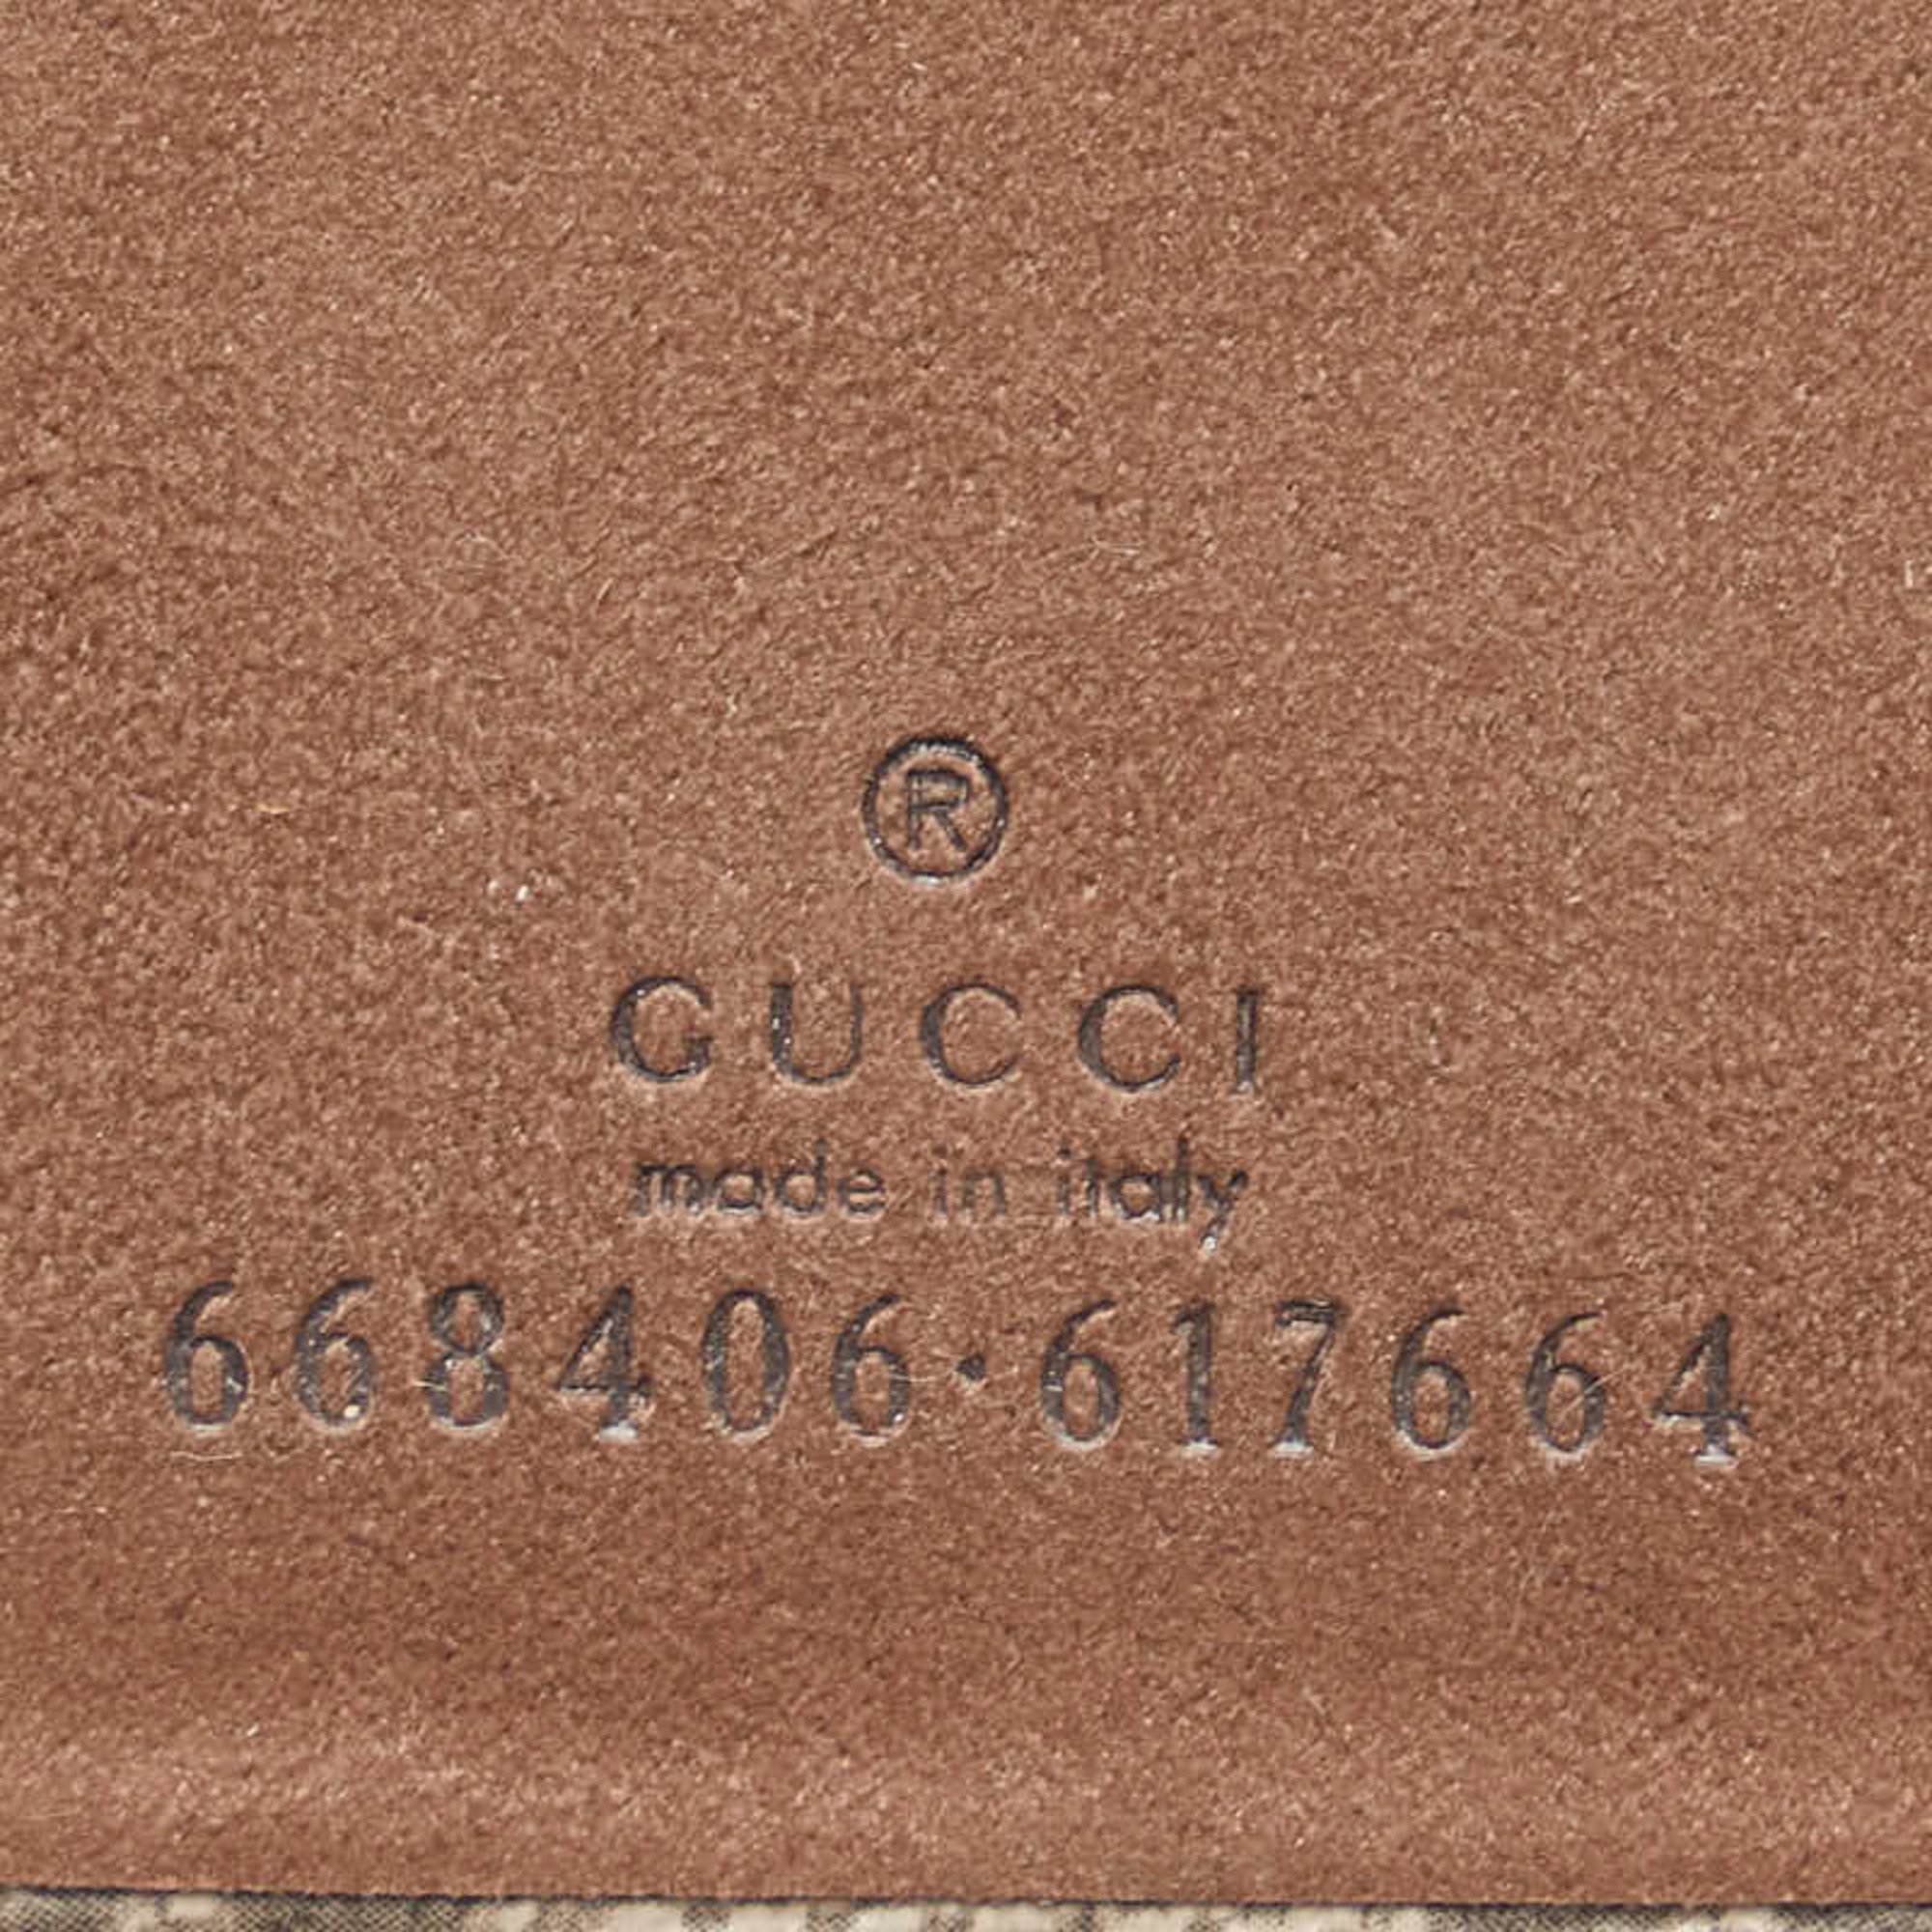 Gucci GG Supreme Bumper Case for iPhone 12/12 Pro 668406 Beige PVC Women's GUCCI